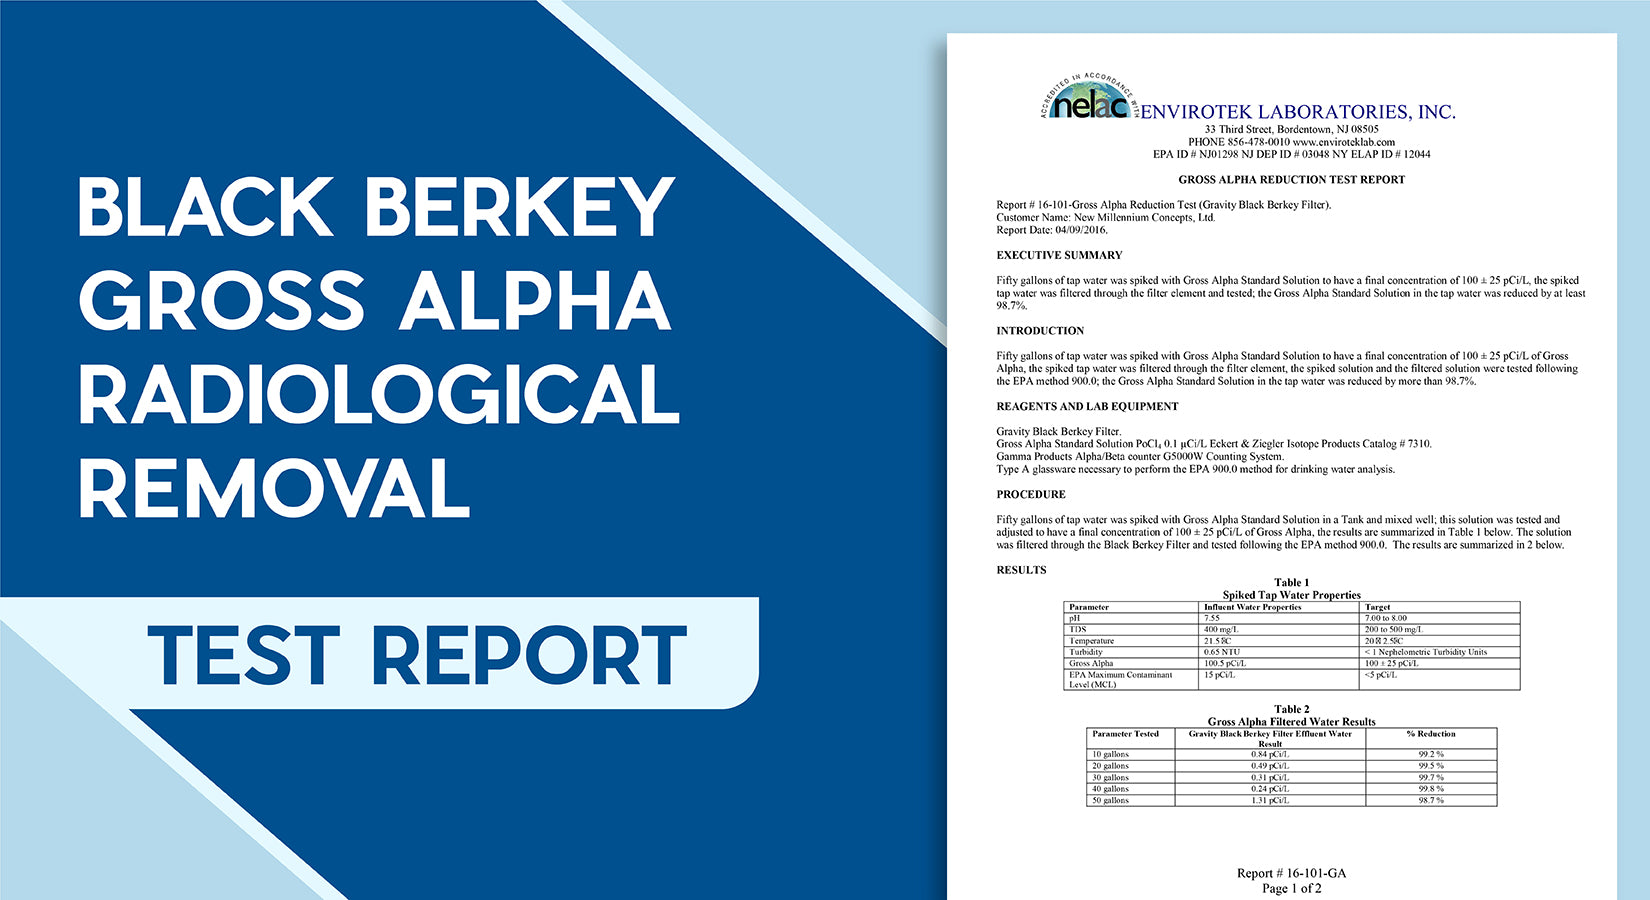 Black Berkey Gross Alpha Radiological Removal Test Report